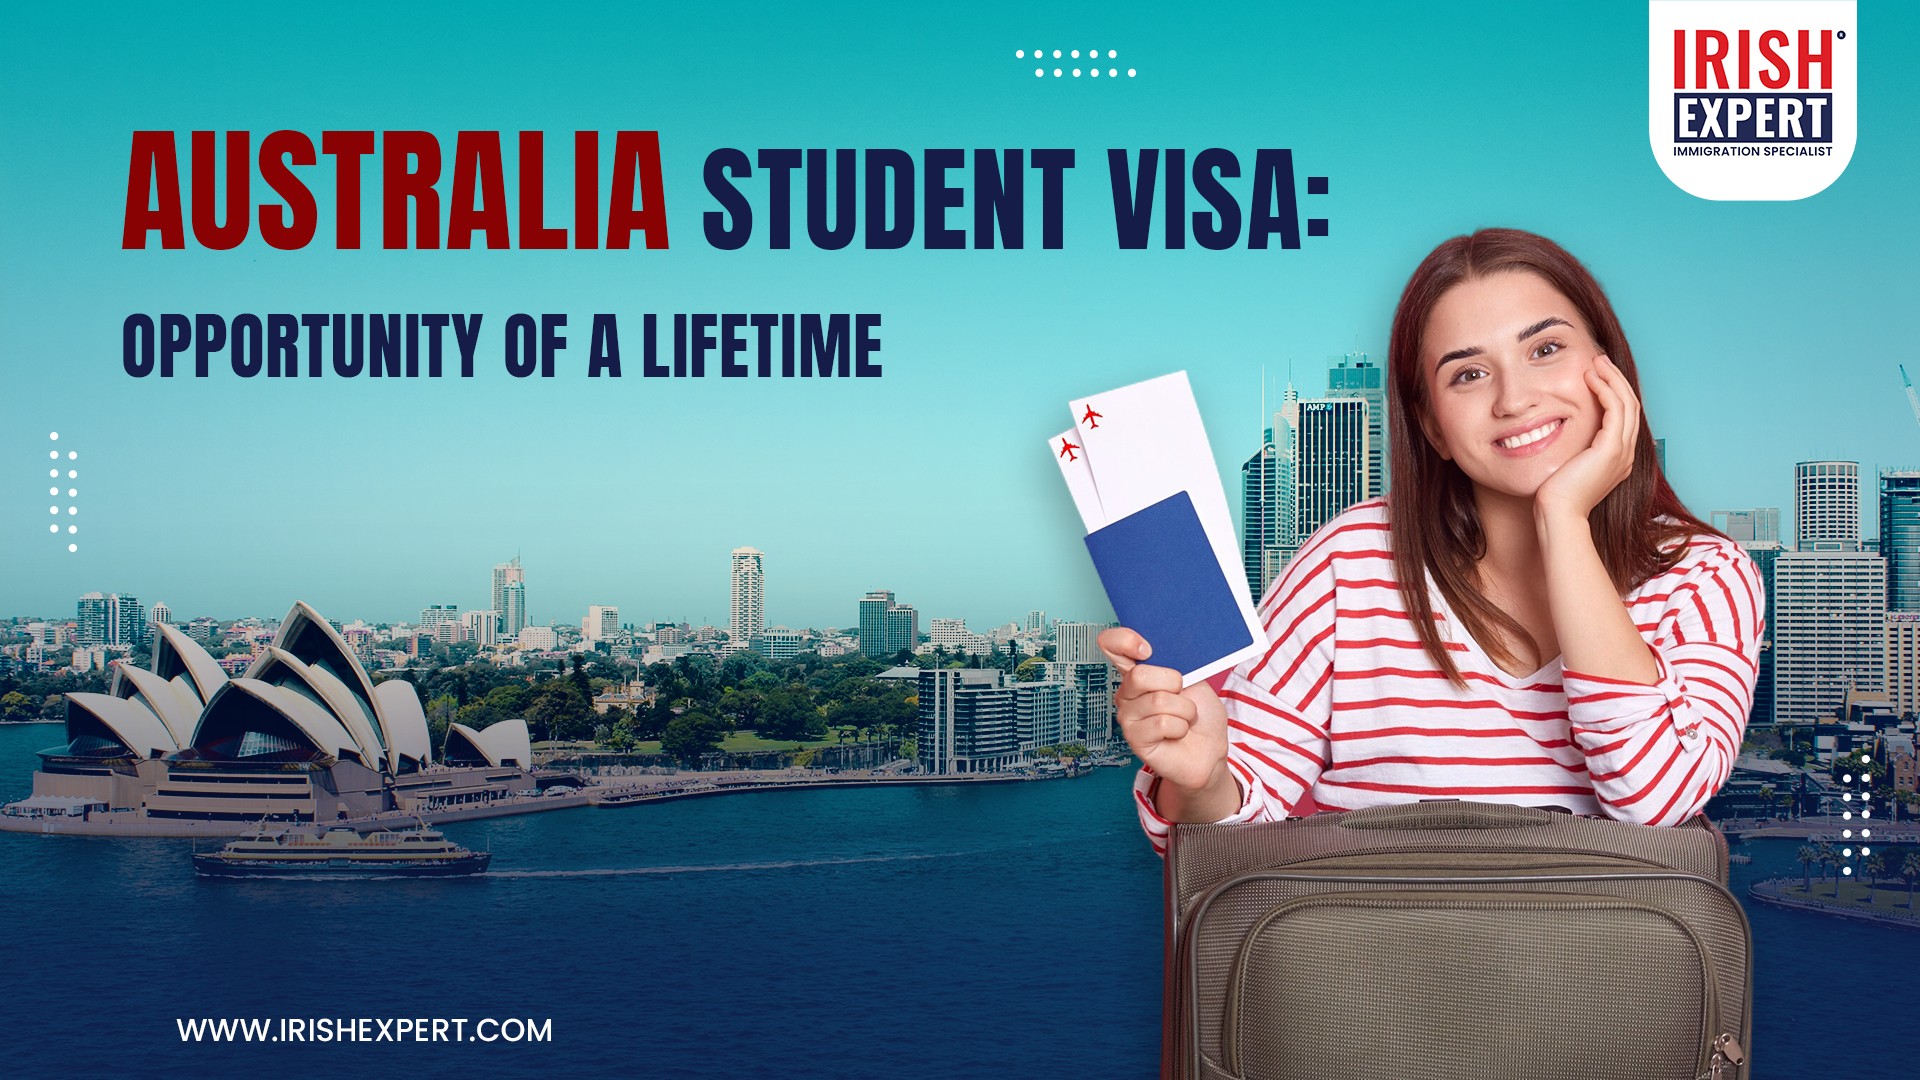 Australia Student Visa: Opportunity of a Lifetime